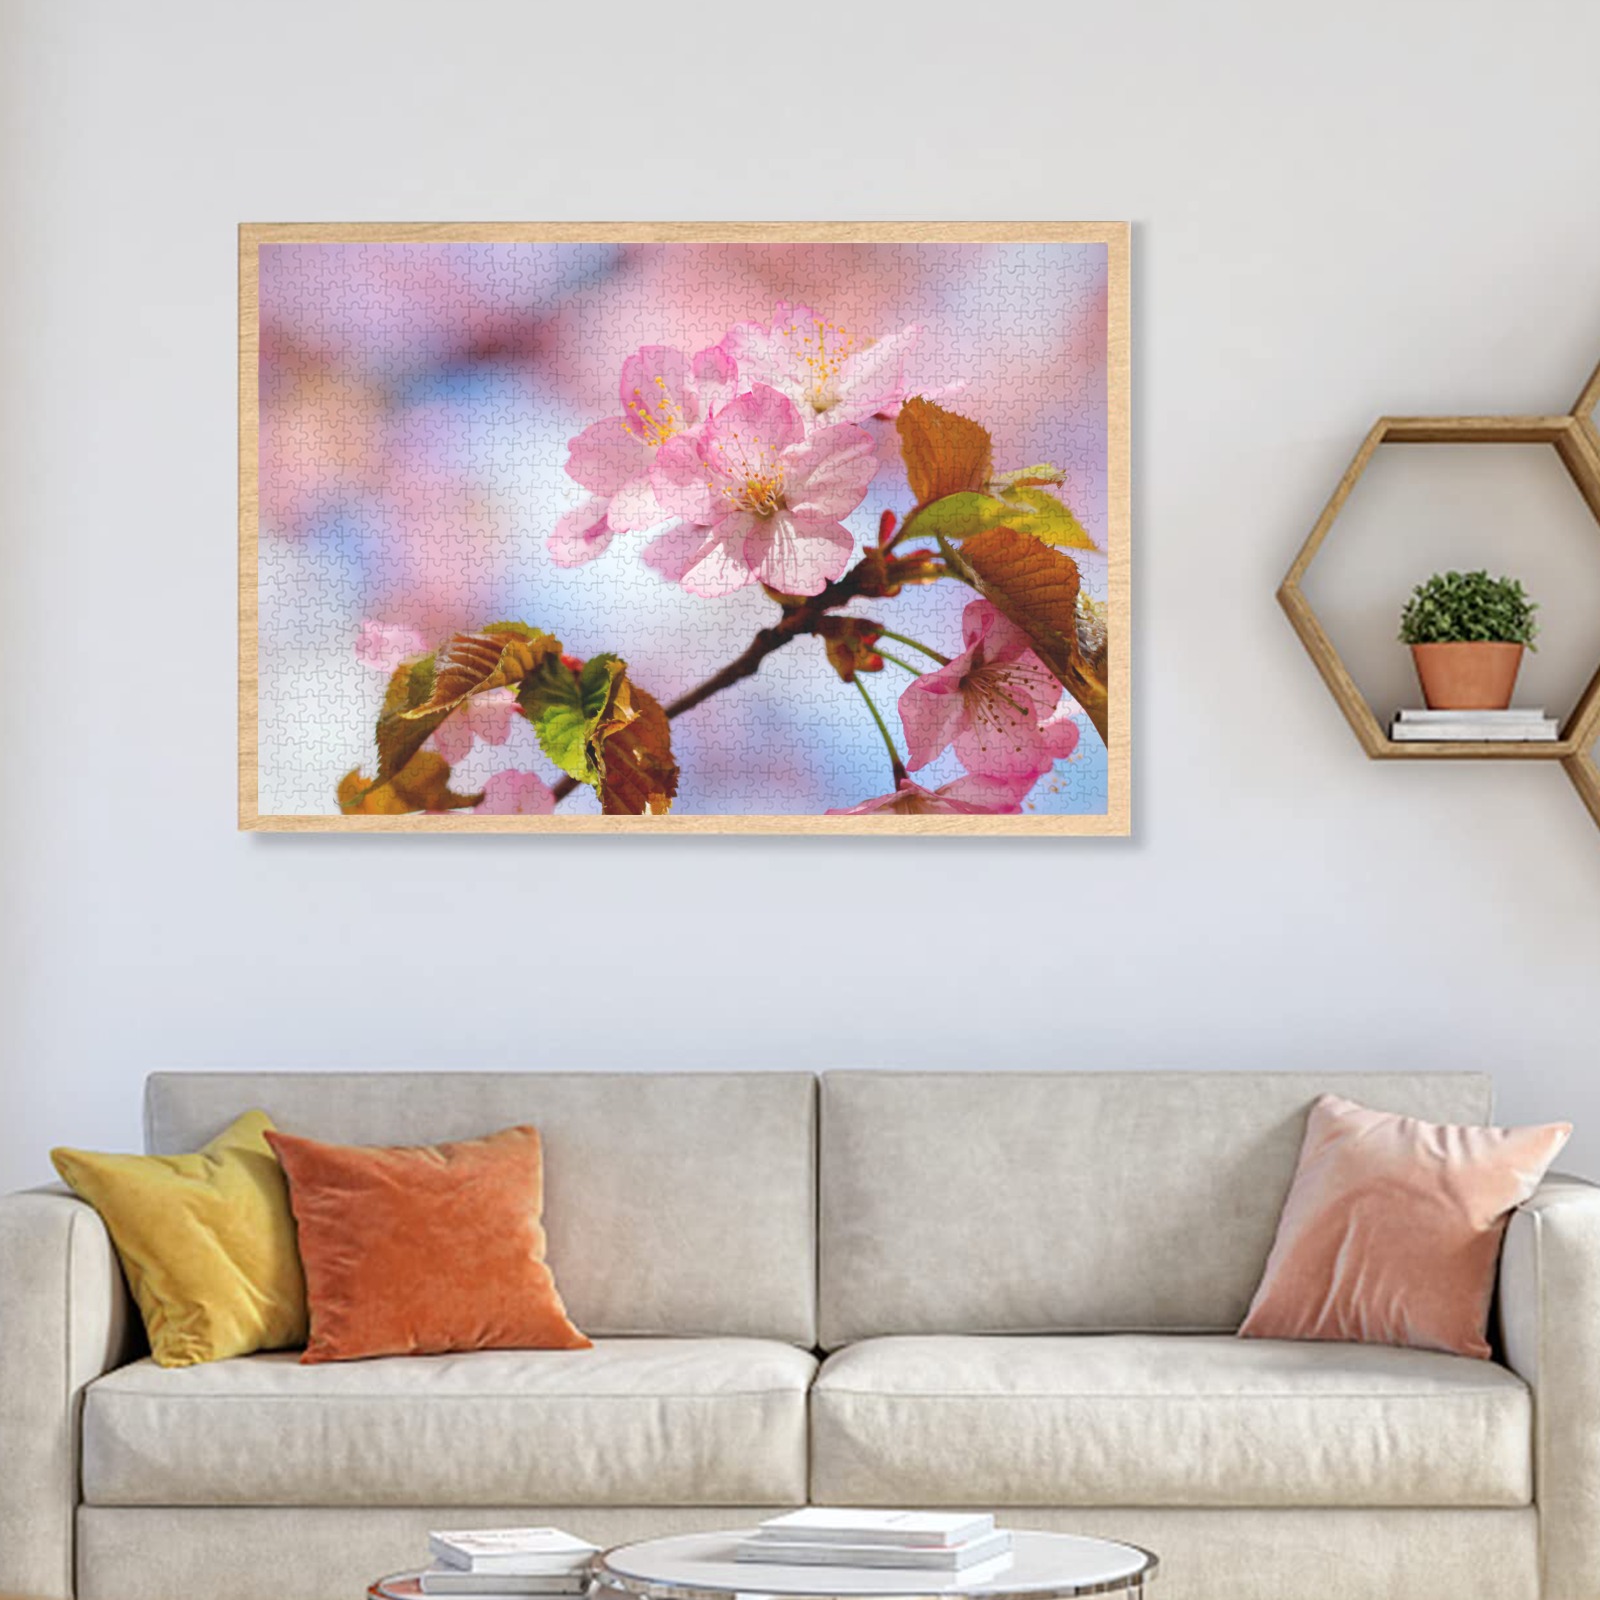 Beauty, love, wisdom of sakura cherry flowers. 1000-Piece Wooden Jigsaw Puzzle (Horizontal)